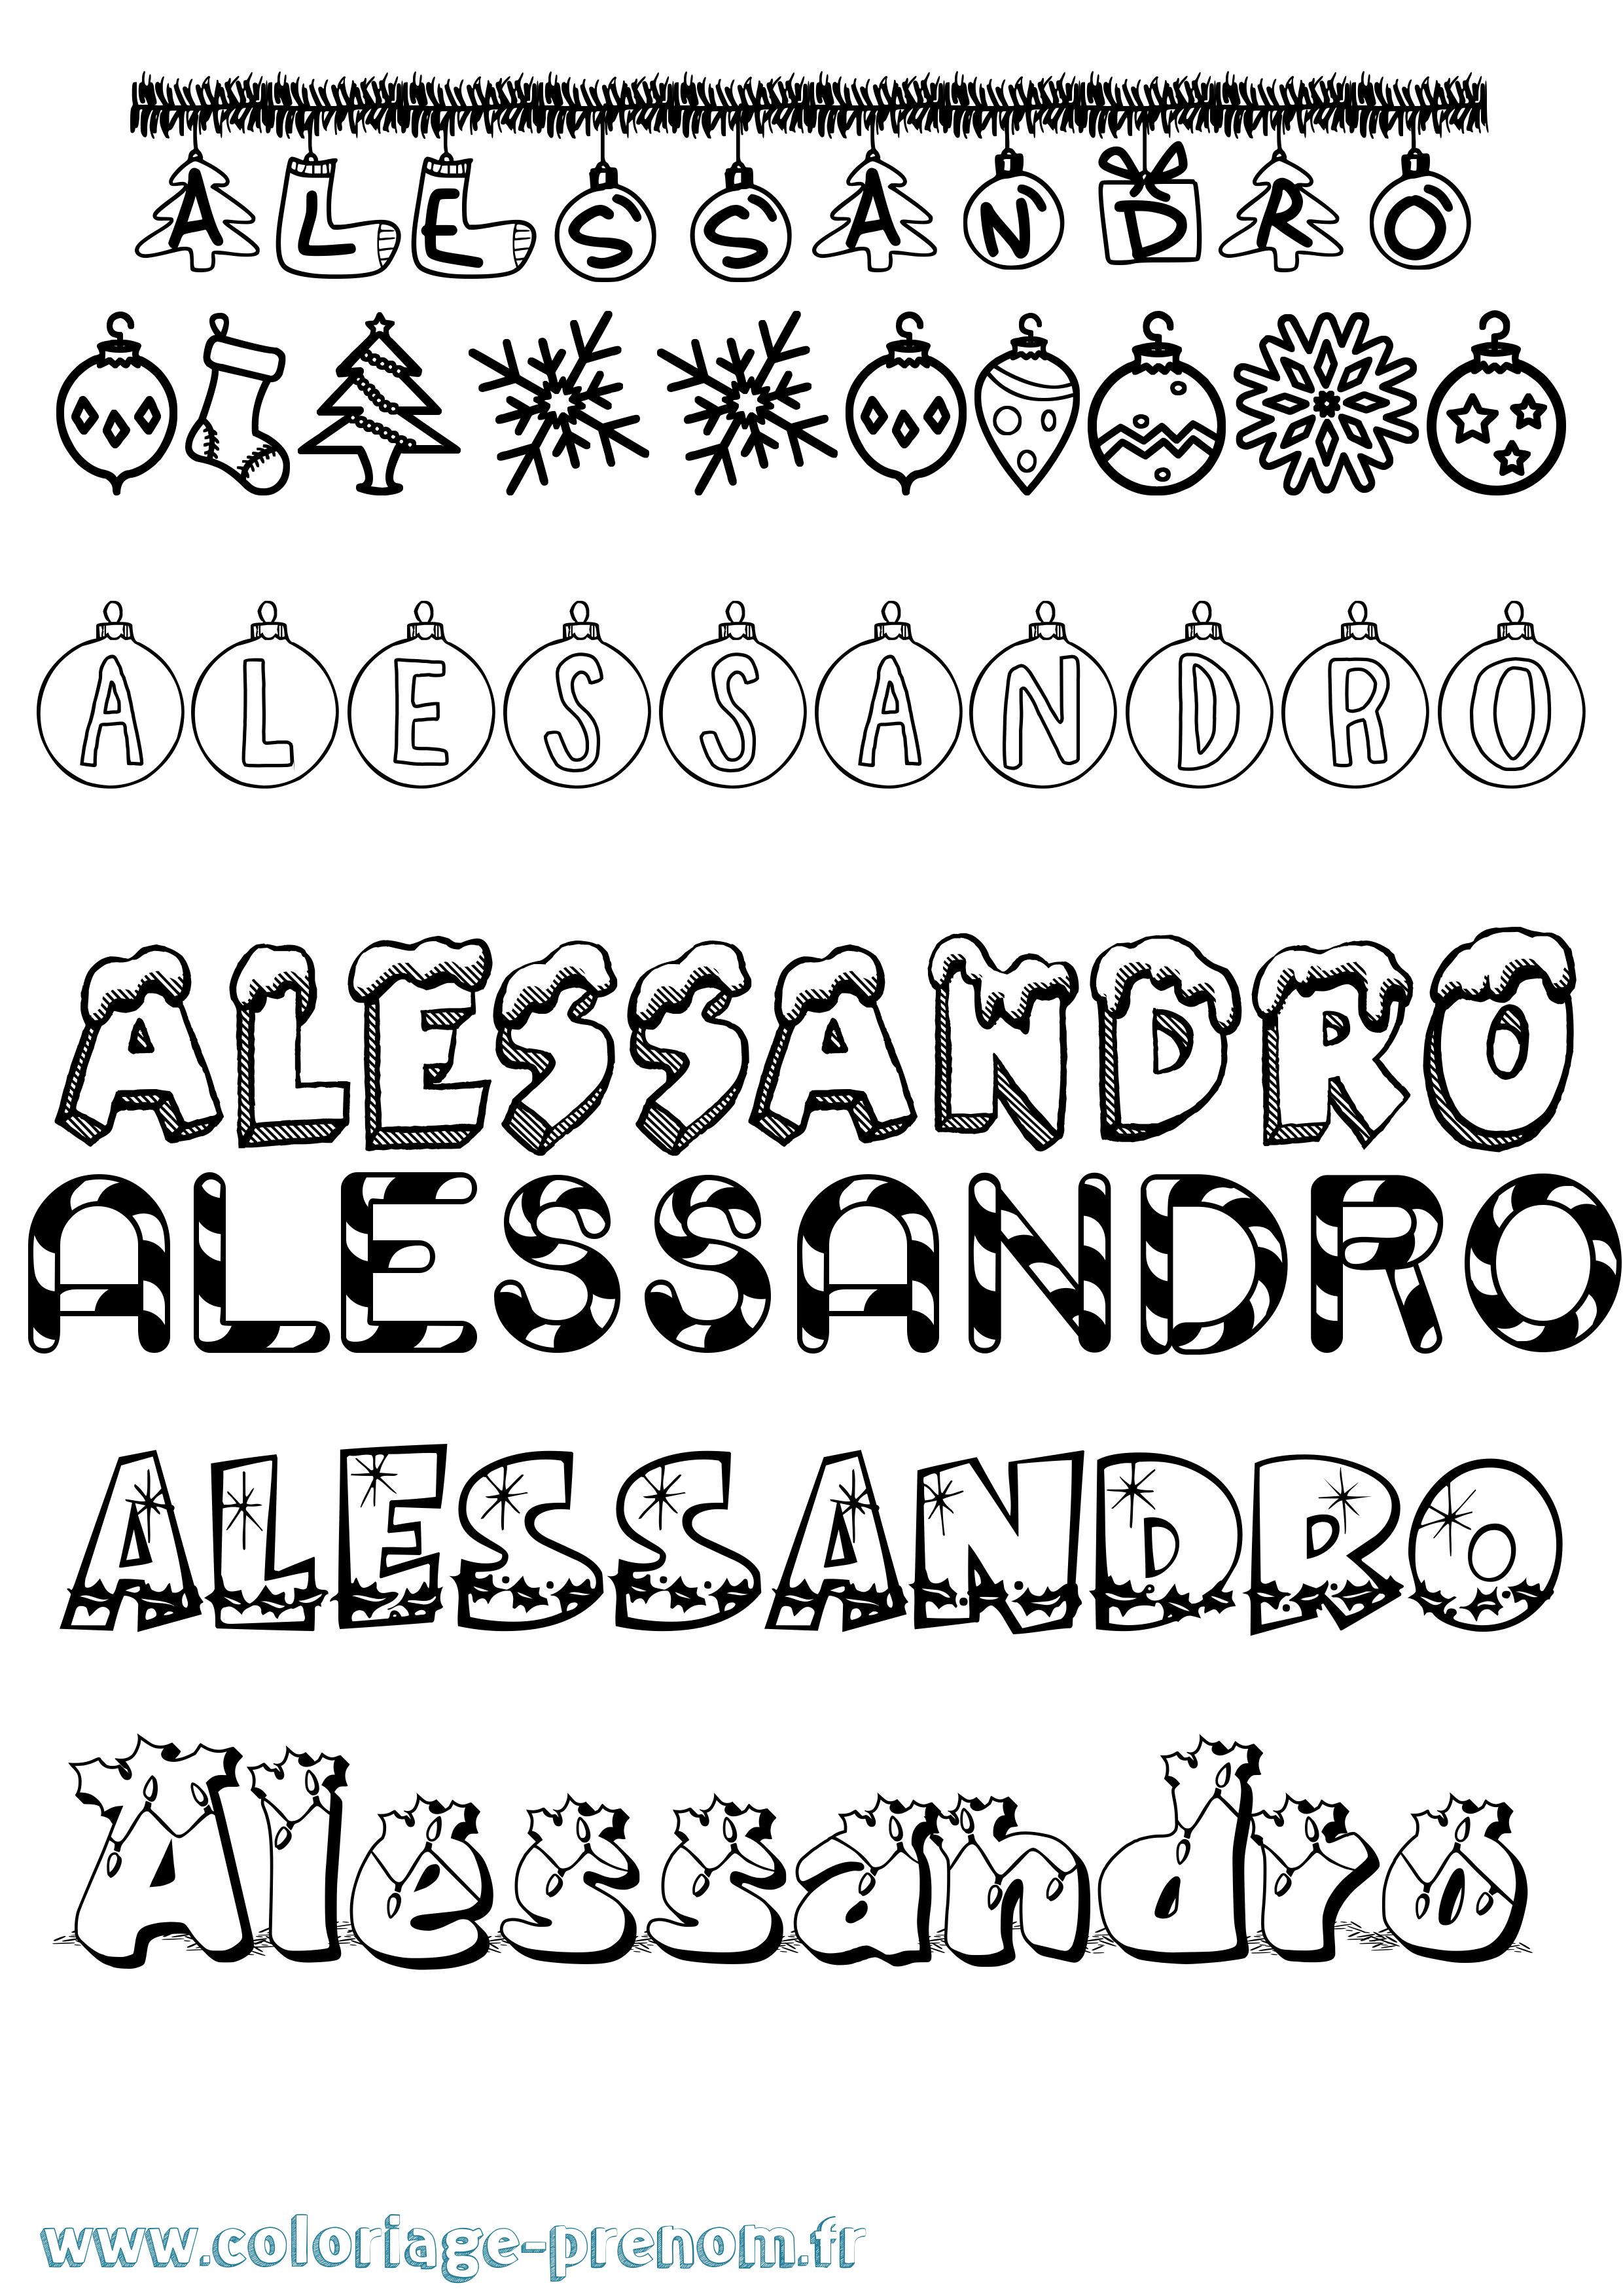 Coloriage prénom Alessandro